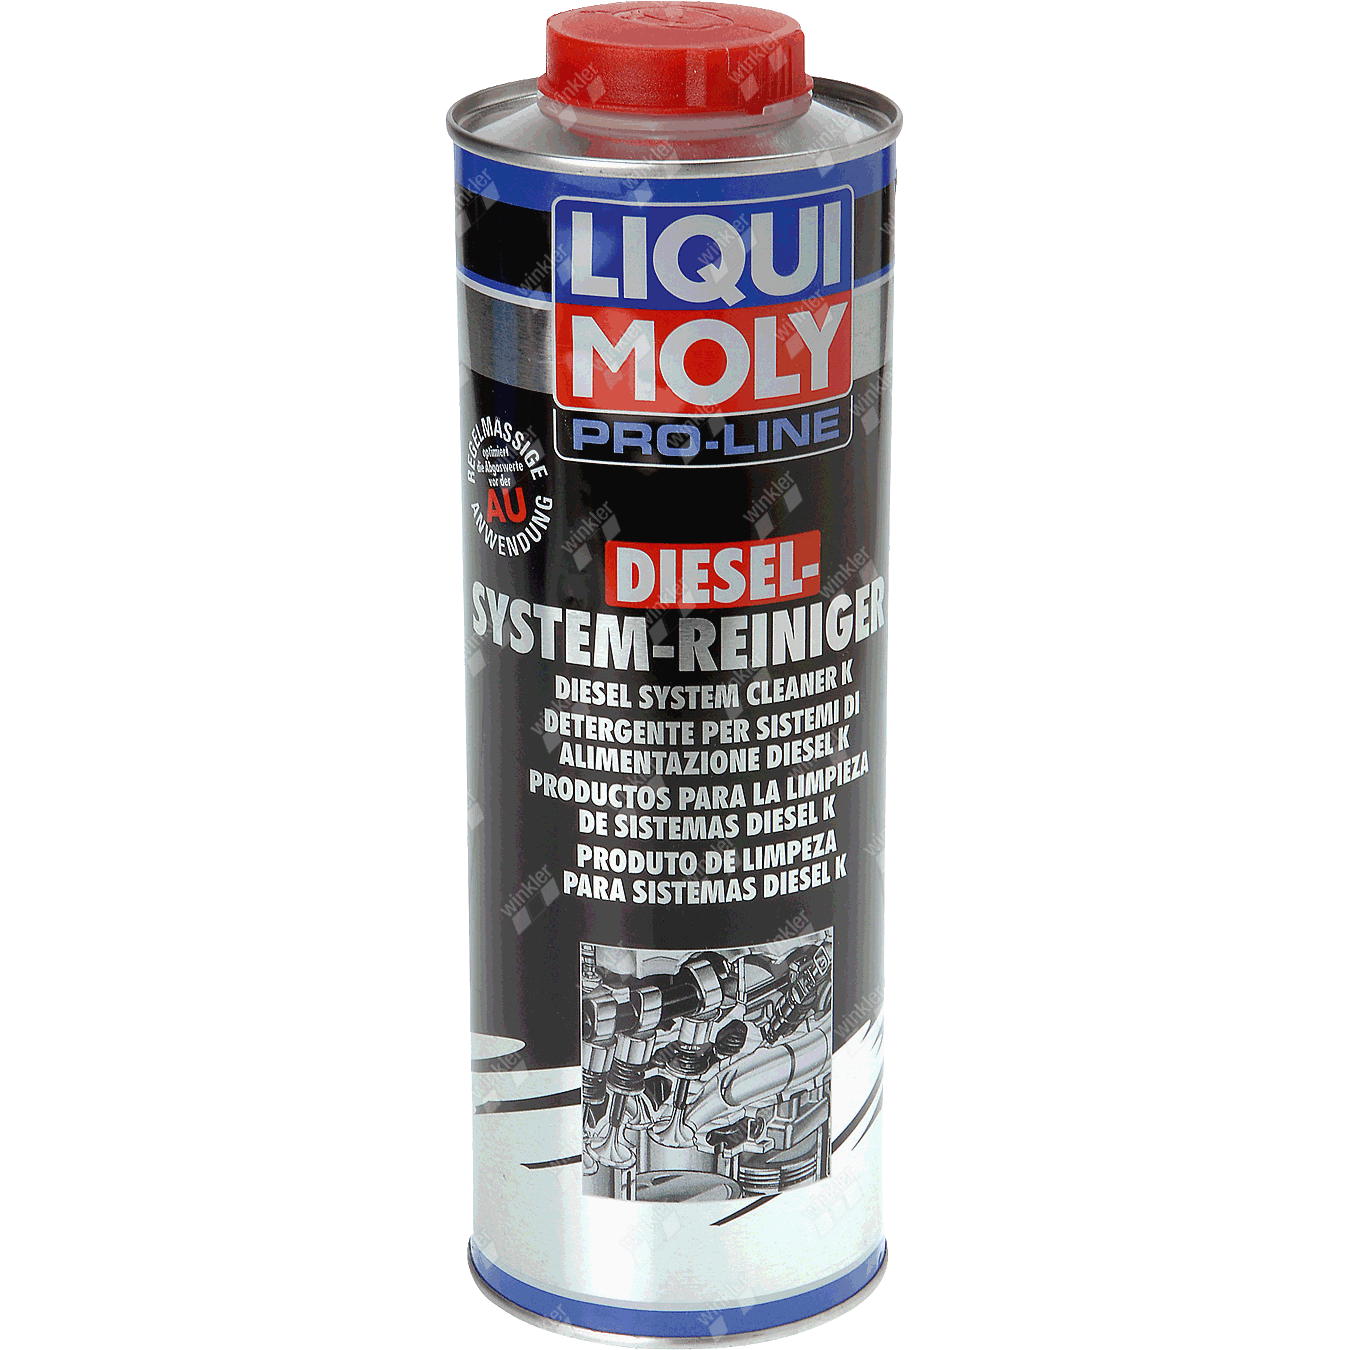 Buy Liqui Moly Pro-Line Diesel Fuel System Cleaner K 5144 1 l